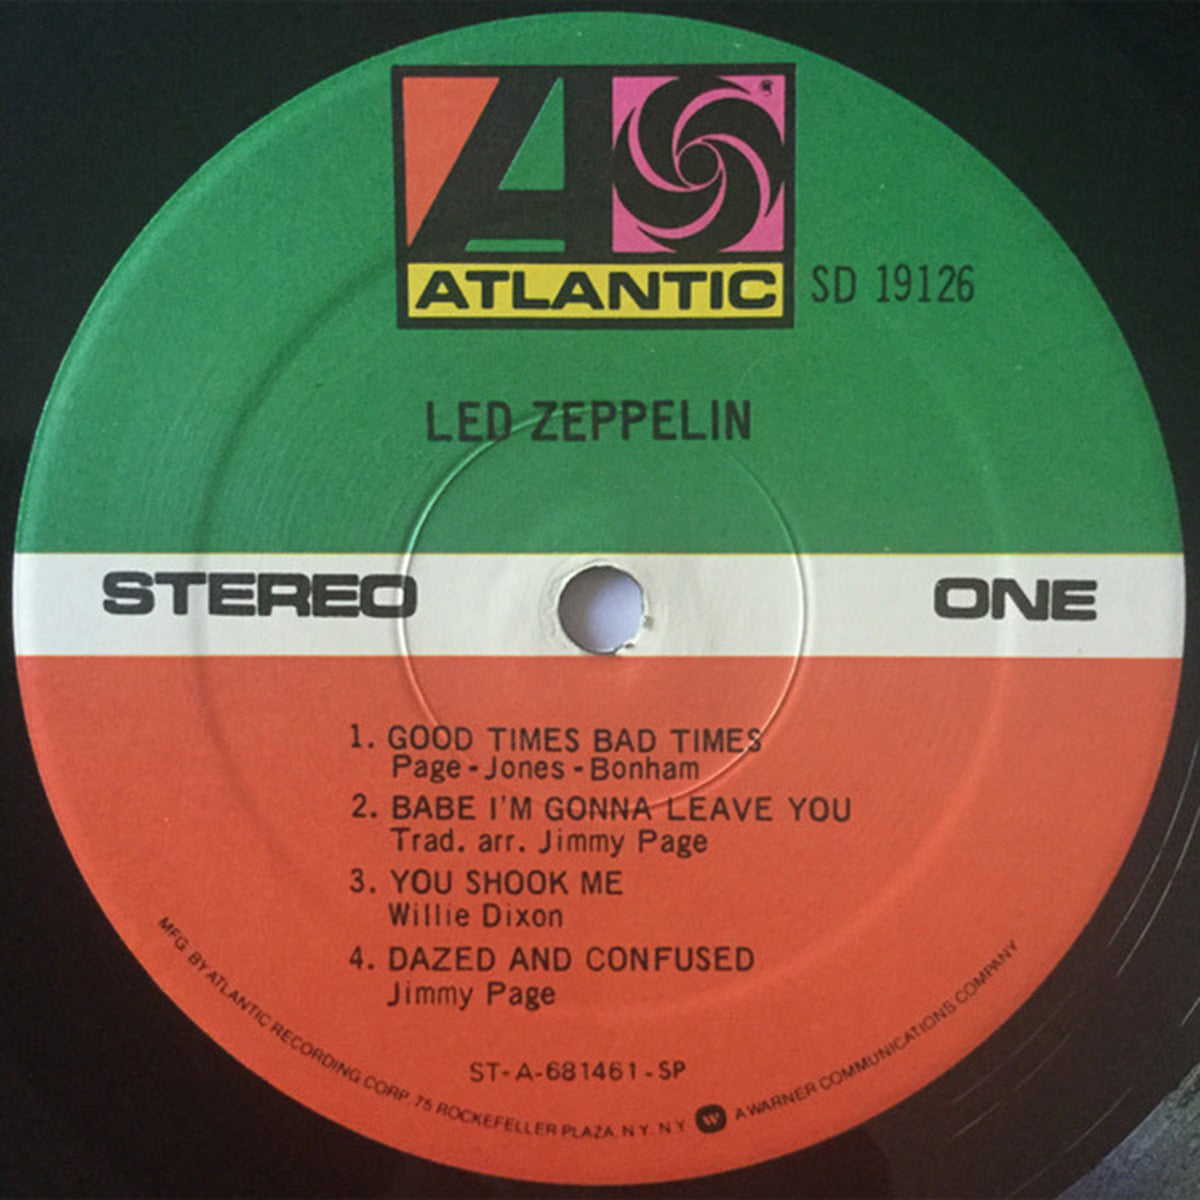 Led Zeppelin – Led Zeppelin US Pressing - RARE SEALED 1977 Pressing